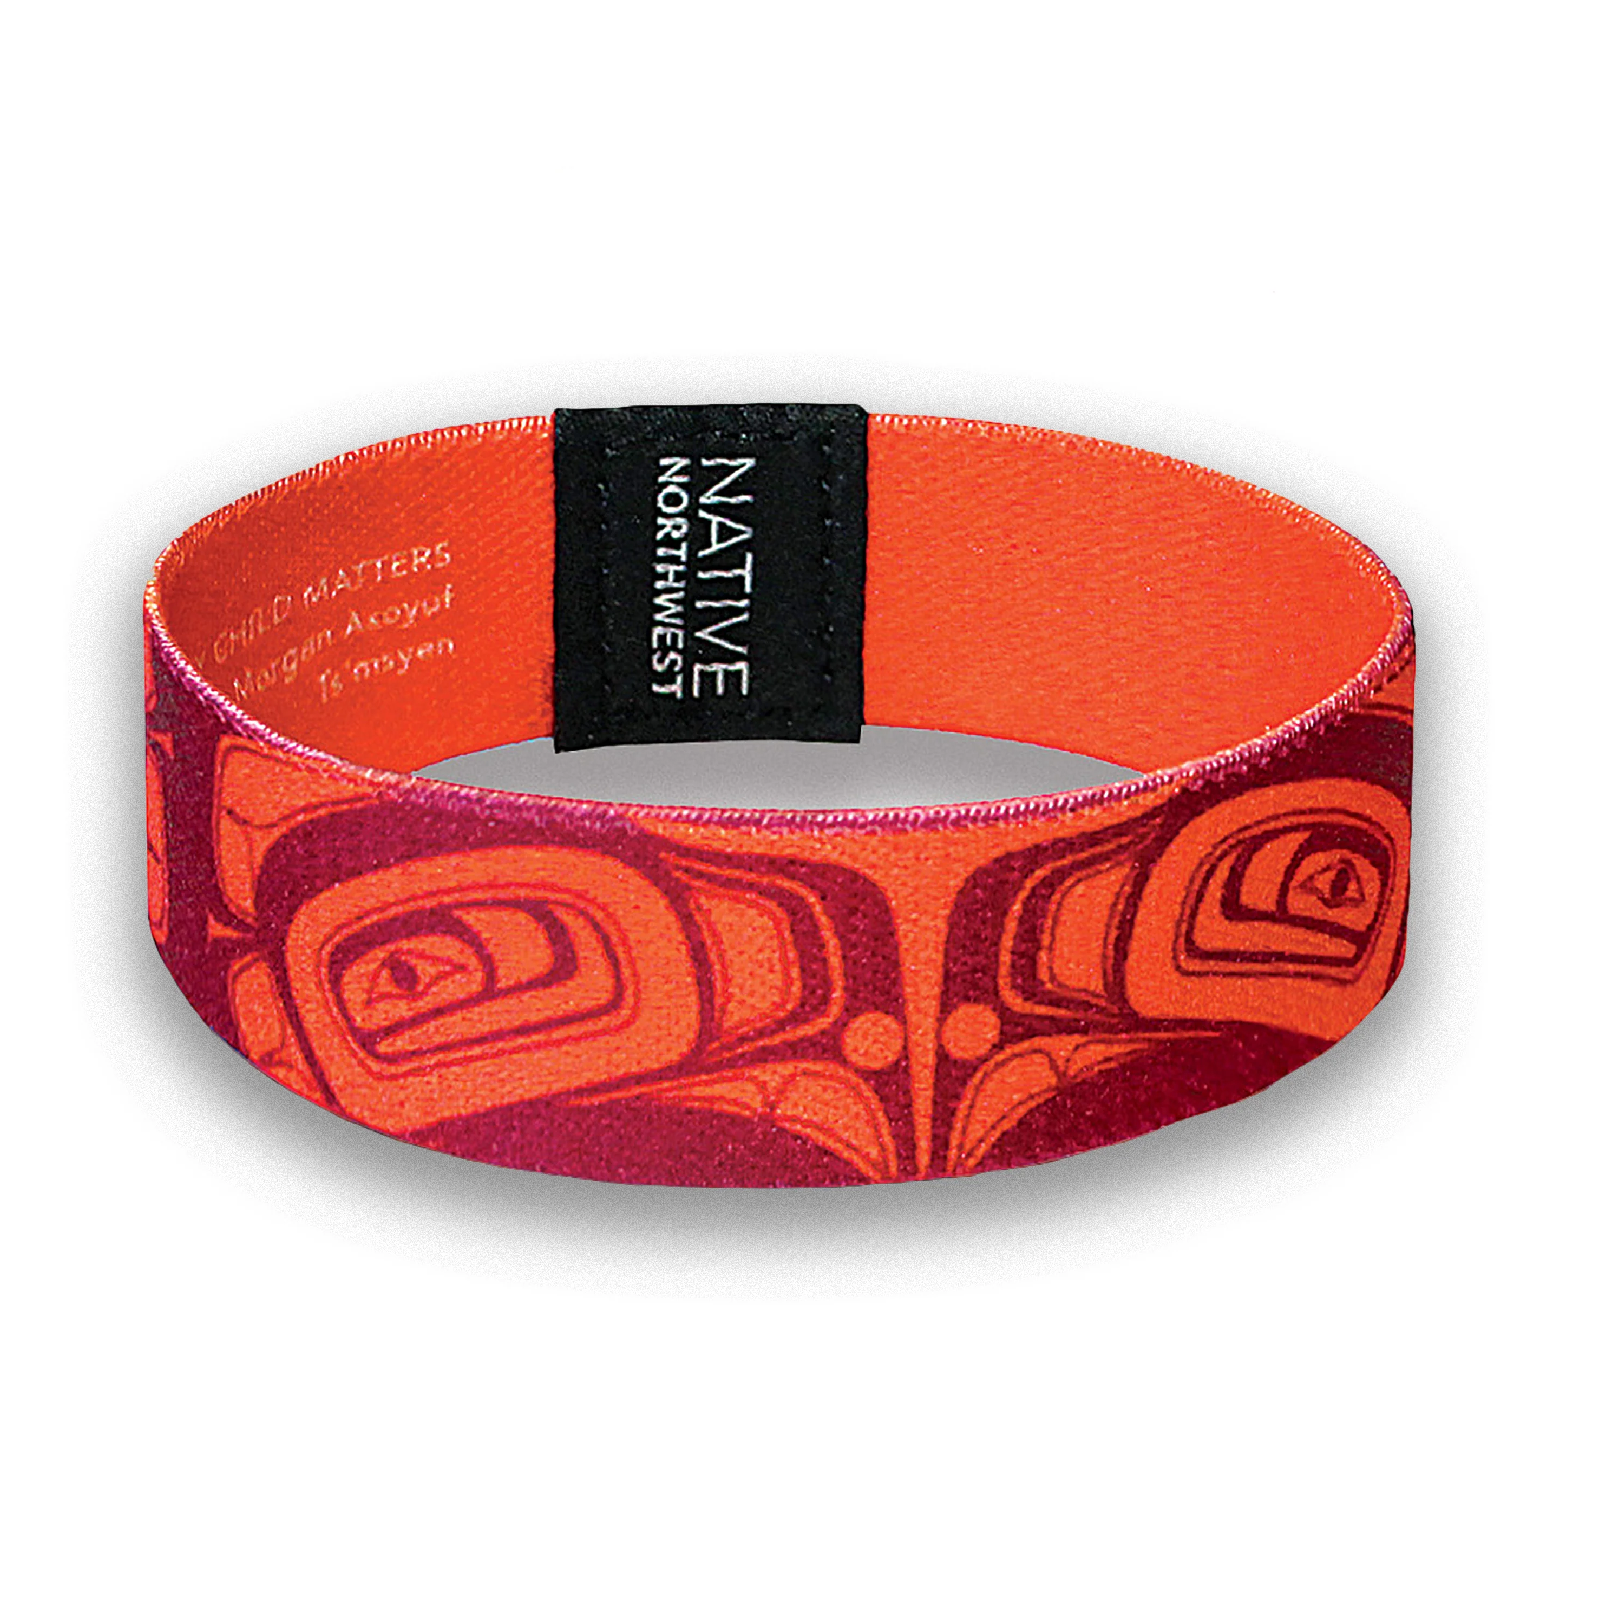 Indigenous Art Wristband Bracelets